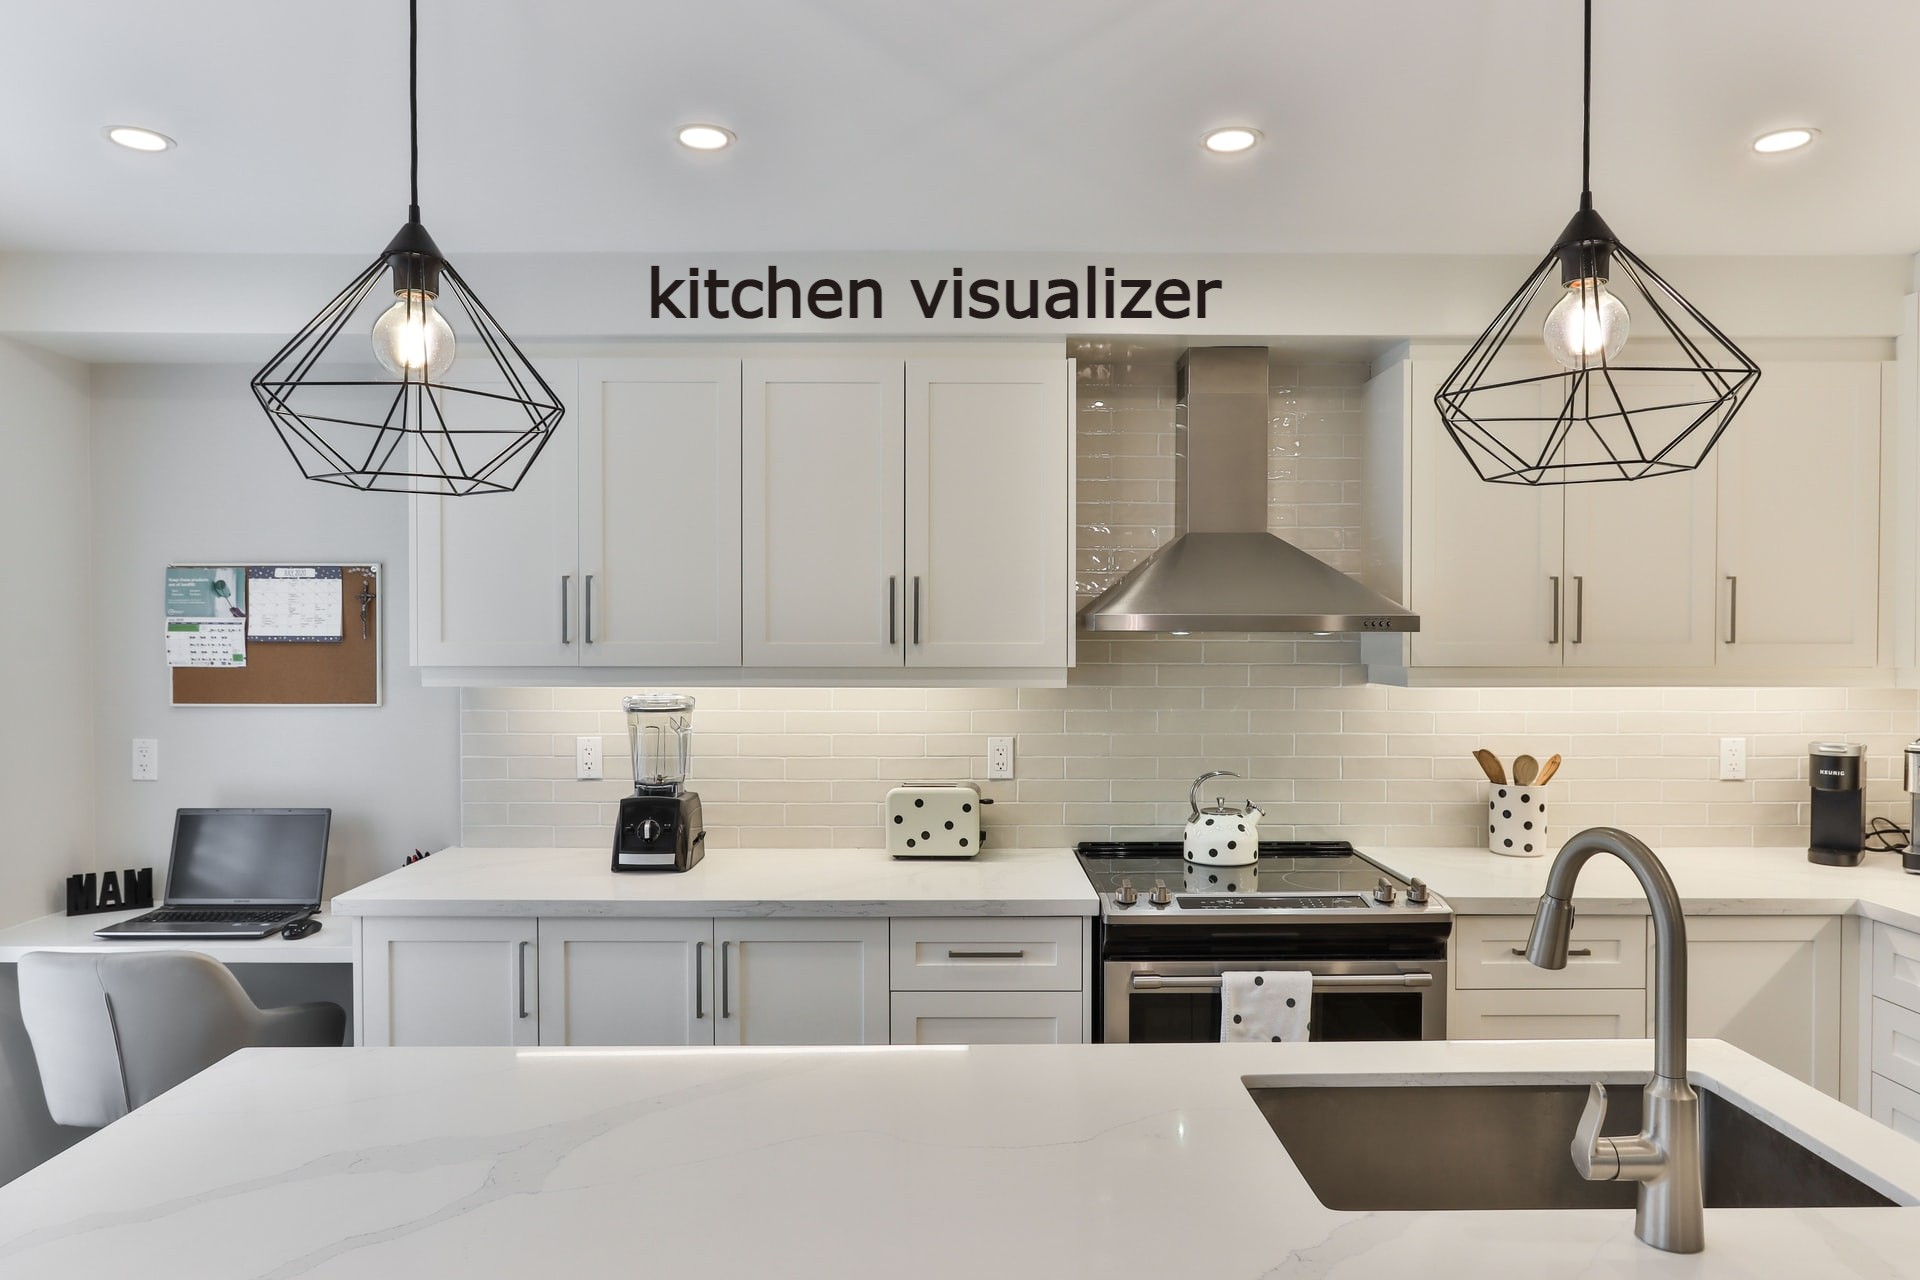 kitchen visualizer